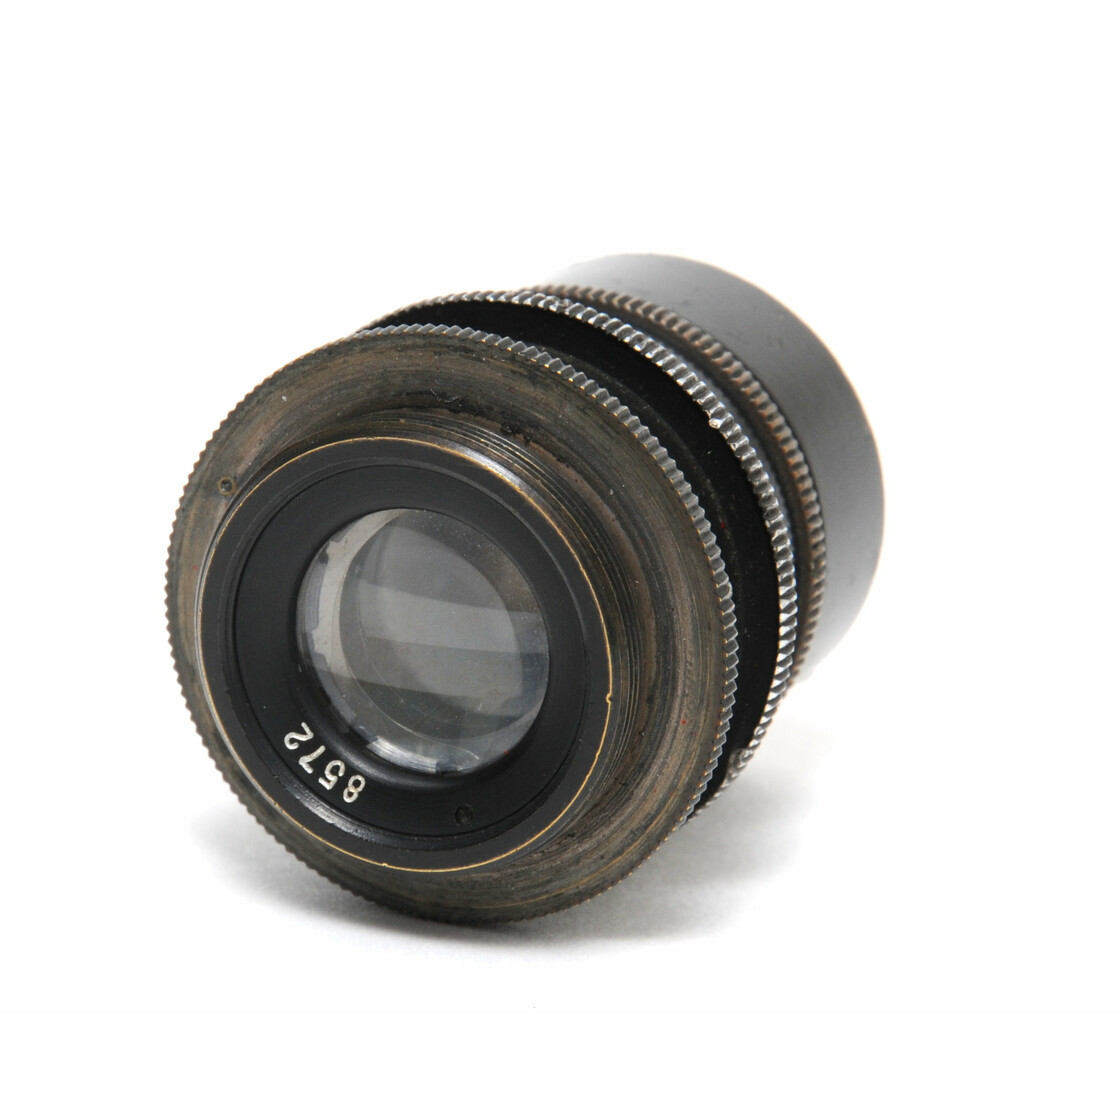 Christian kleermaker blootstelling Eymax Anastigmat 2 Inch 50.8mm f/4.5 lens w. aperture C Mount, 99,00 €